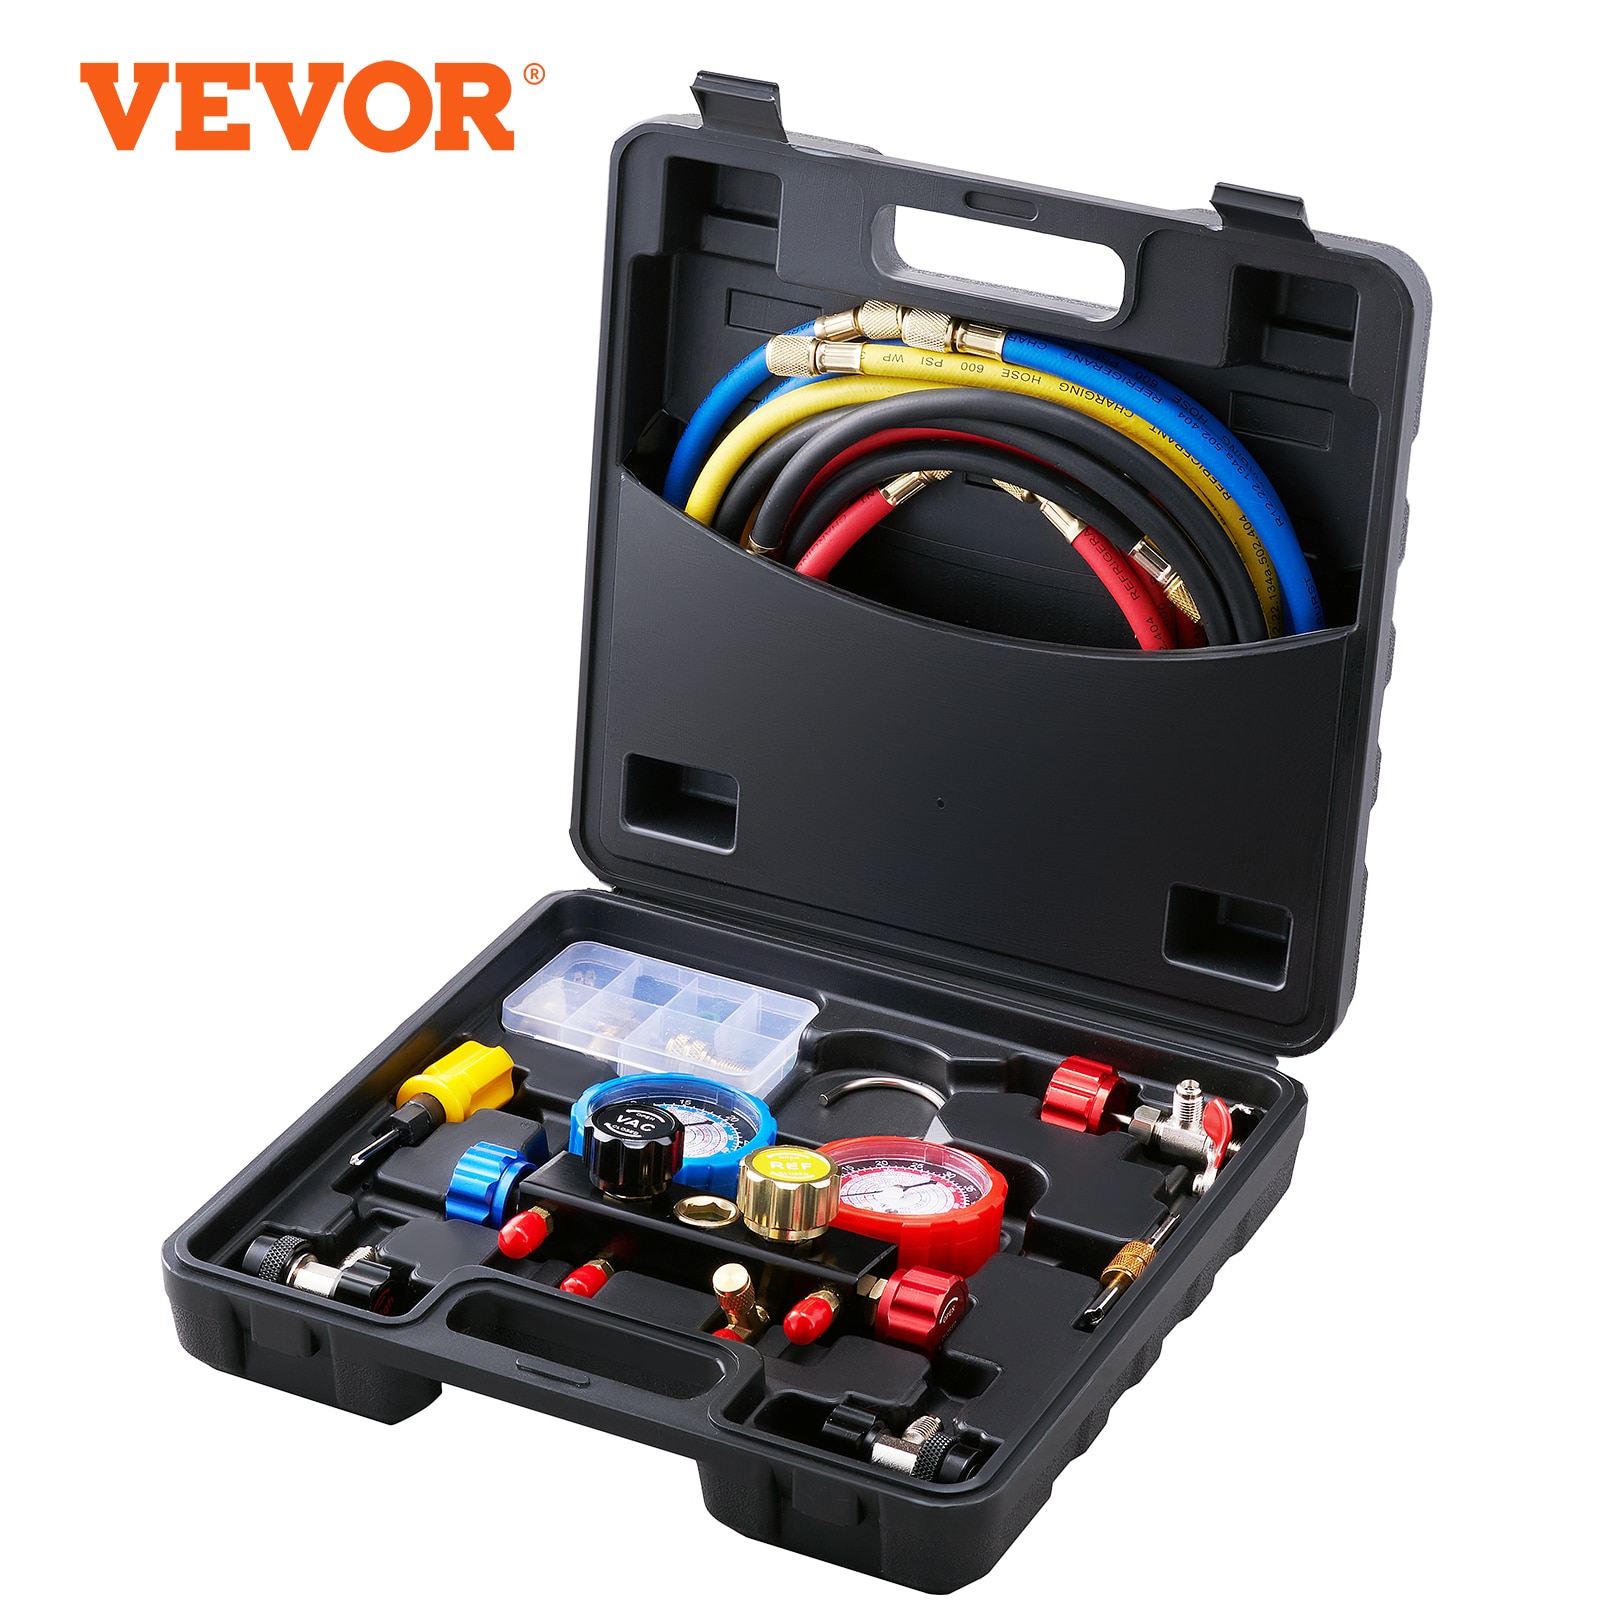 VEVOR 107 Pcs Dent Removal Kit, Paintless Dent Repair Kit with